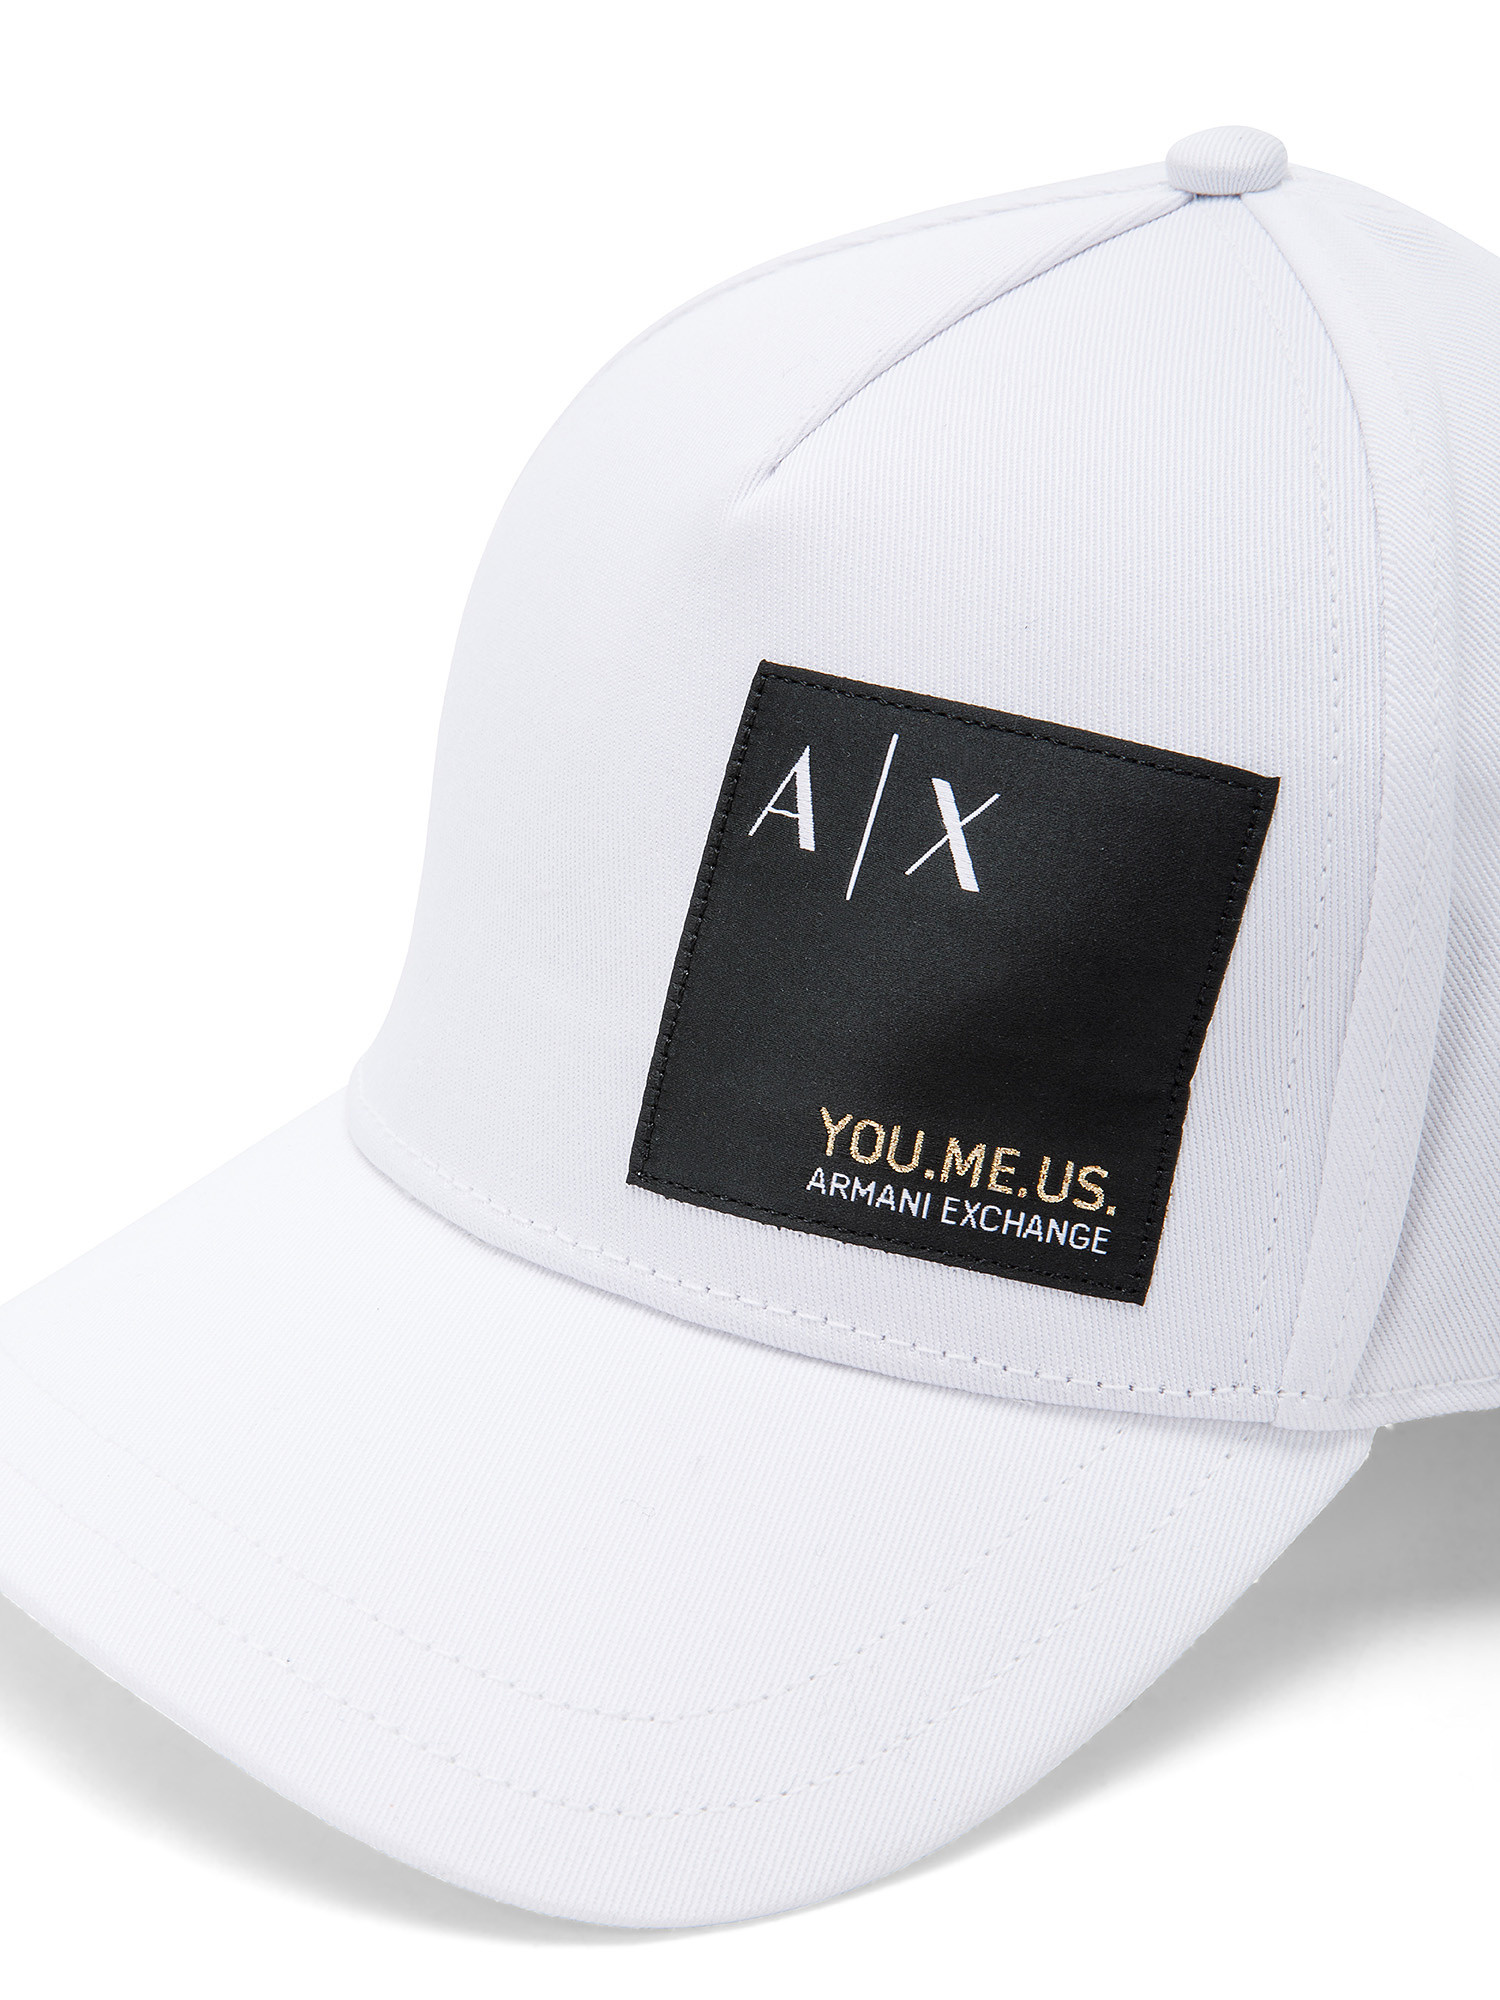 Armani Exchange - Organic cotton cap with visor, White, large image number 1